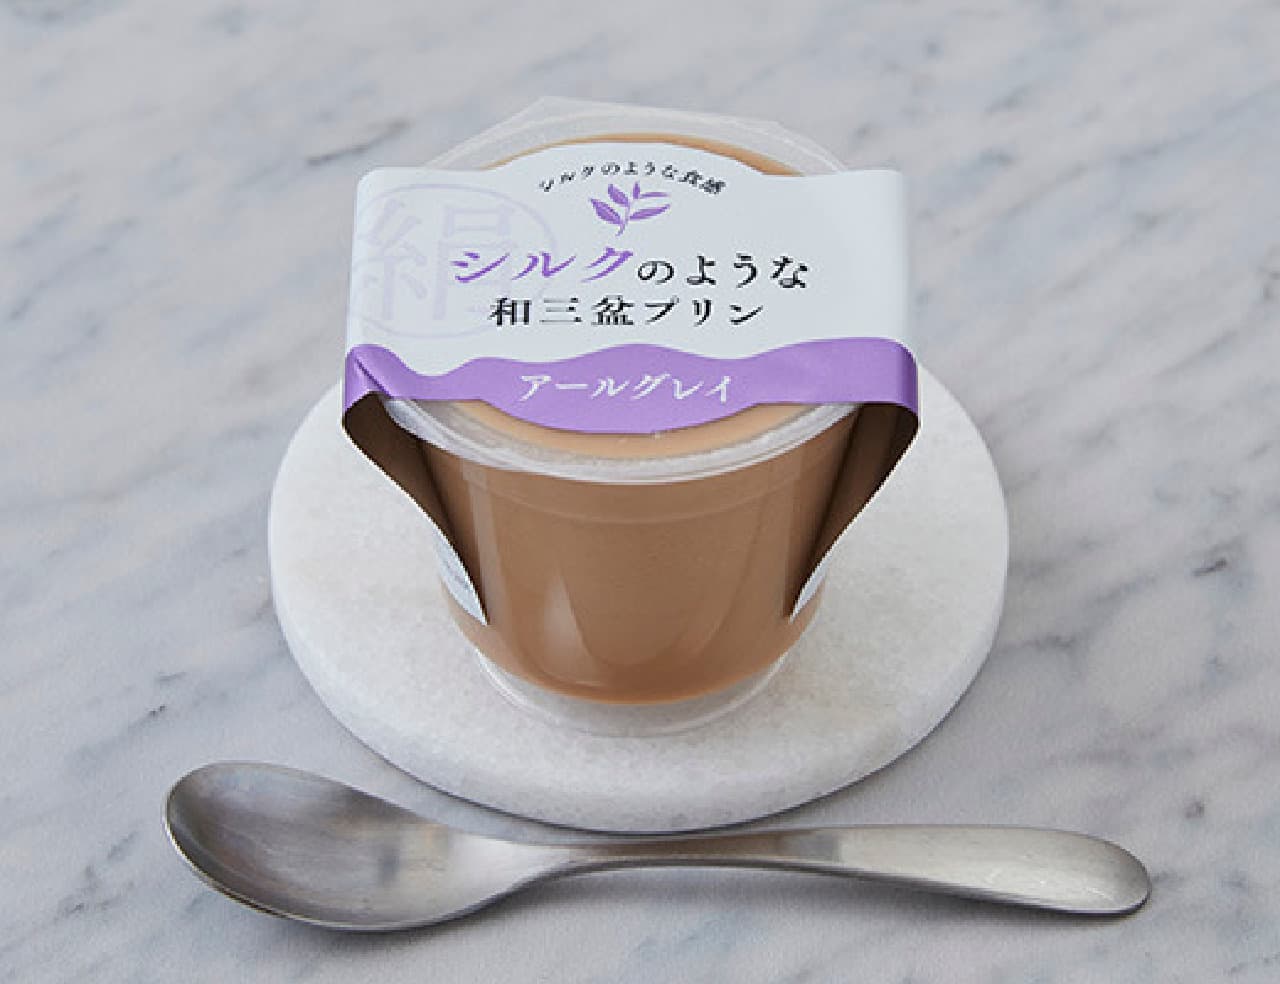 LAWSON "Tokushima Sangyo Silky Wasanbon Pudding Earl Grey 120g